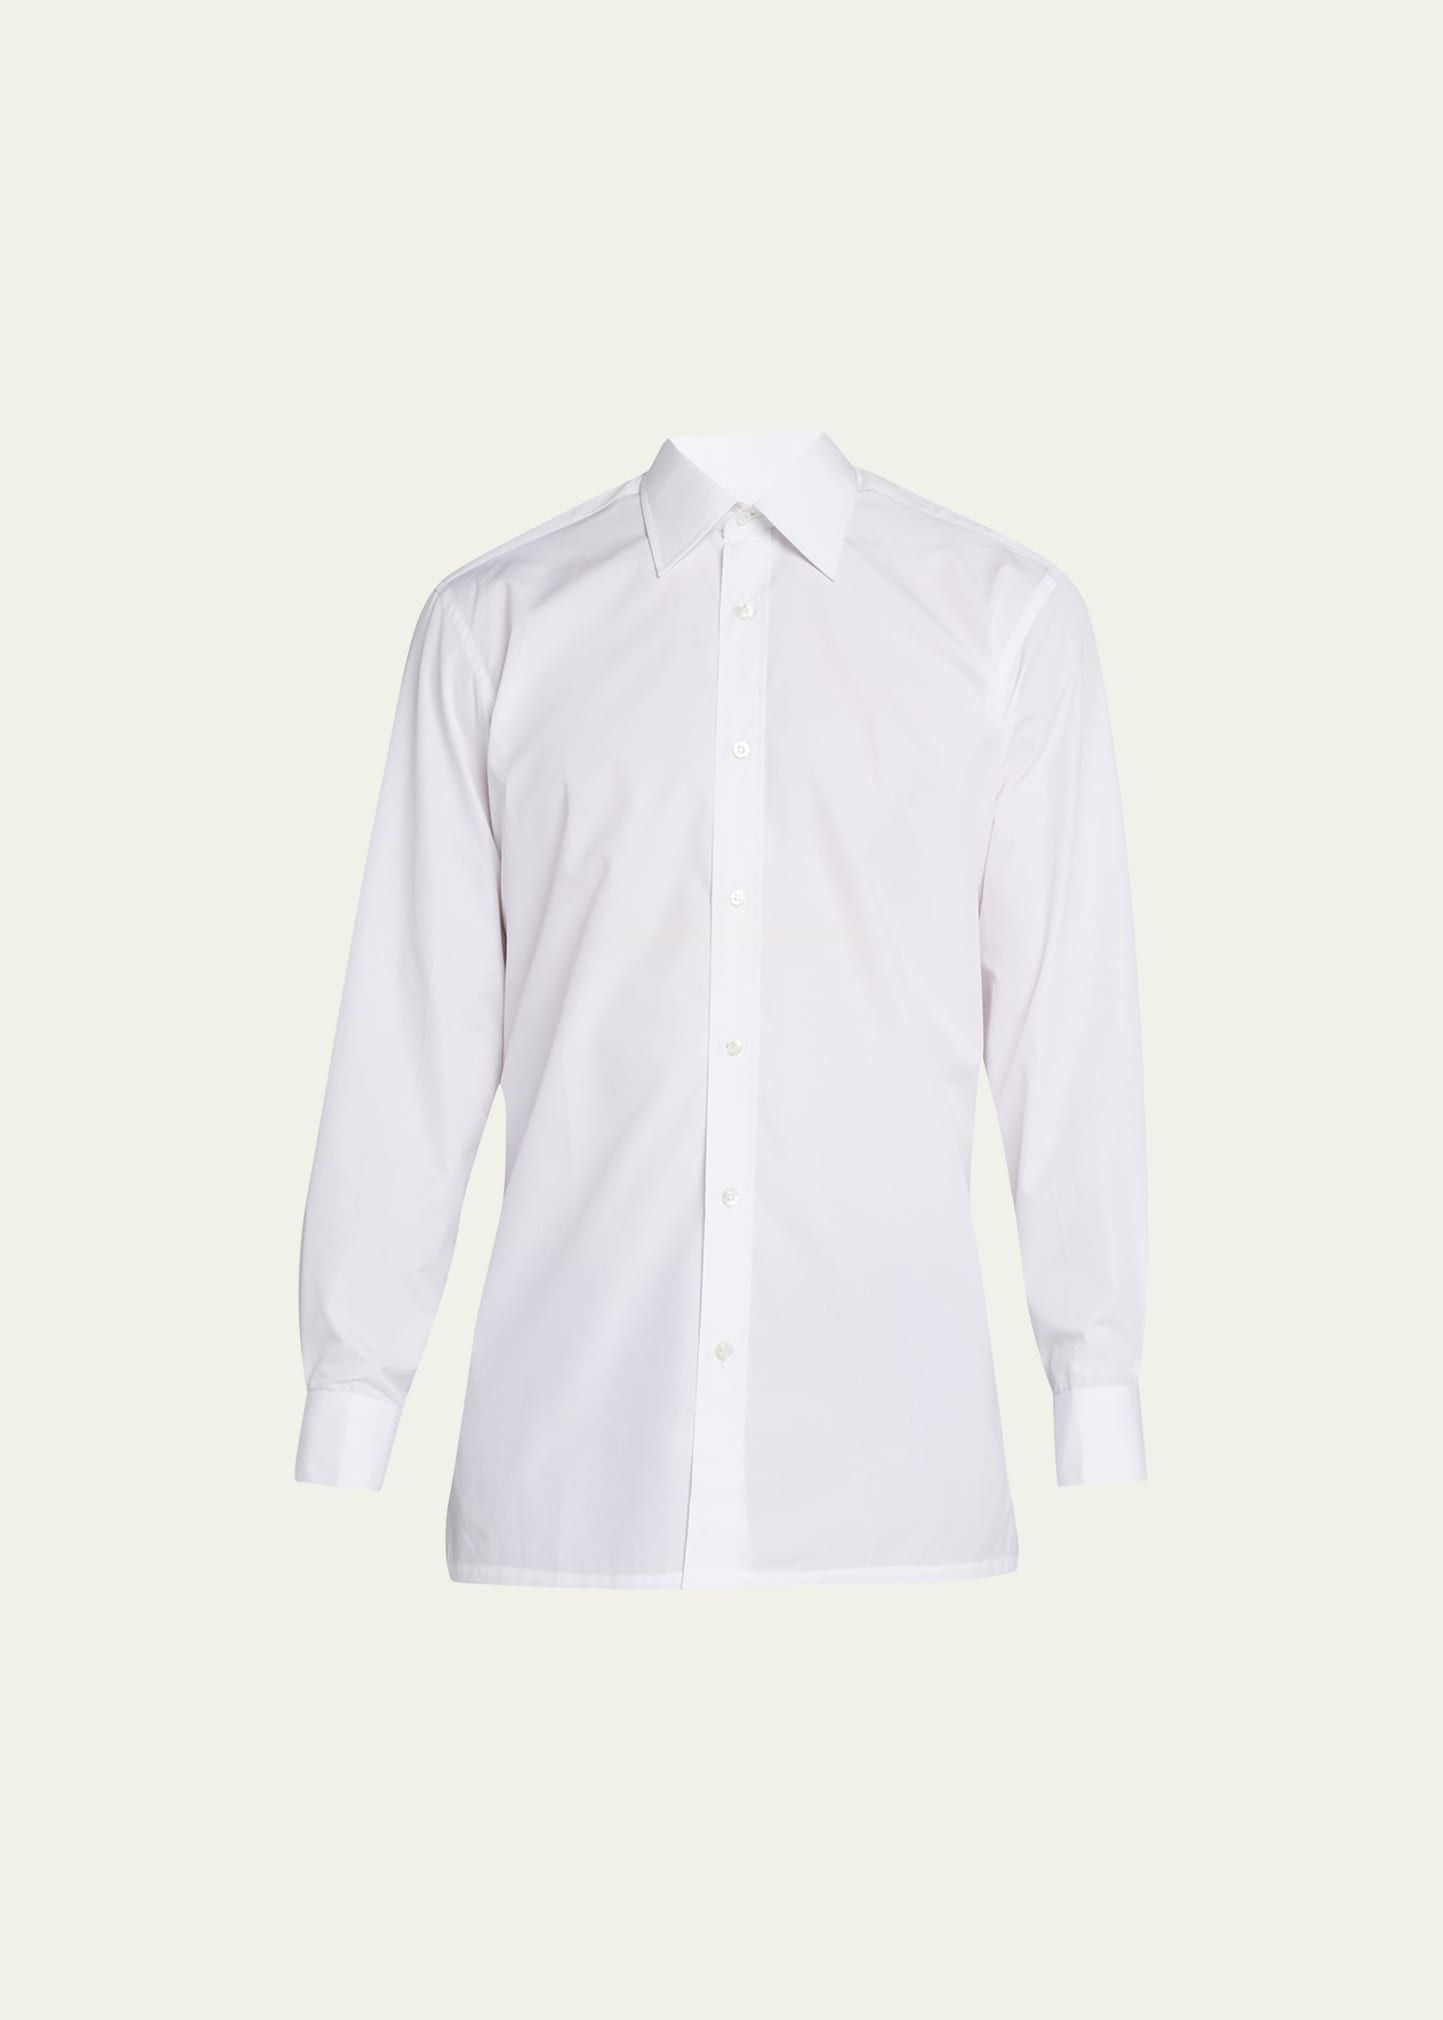 Charvet Men's Cotton Poplin Dress Shirt